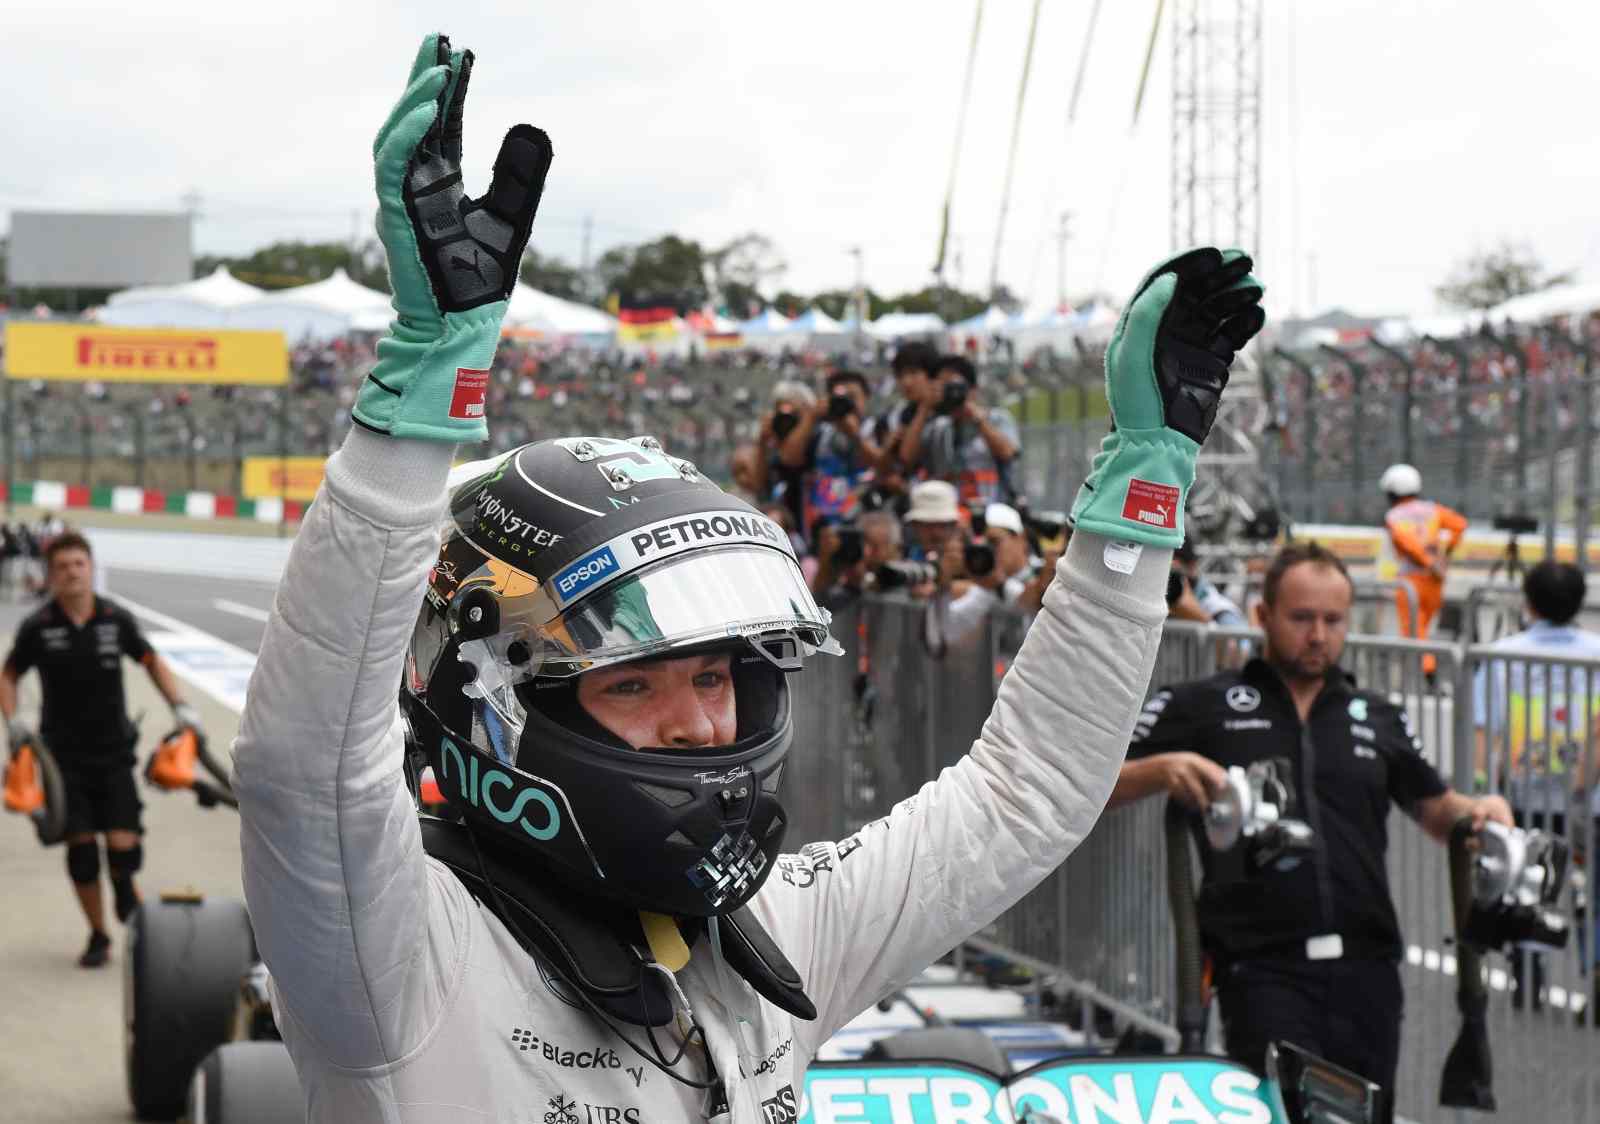 13º lugar: Nico Rosberg (ALE) - 23 vitórias.